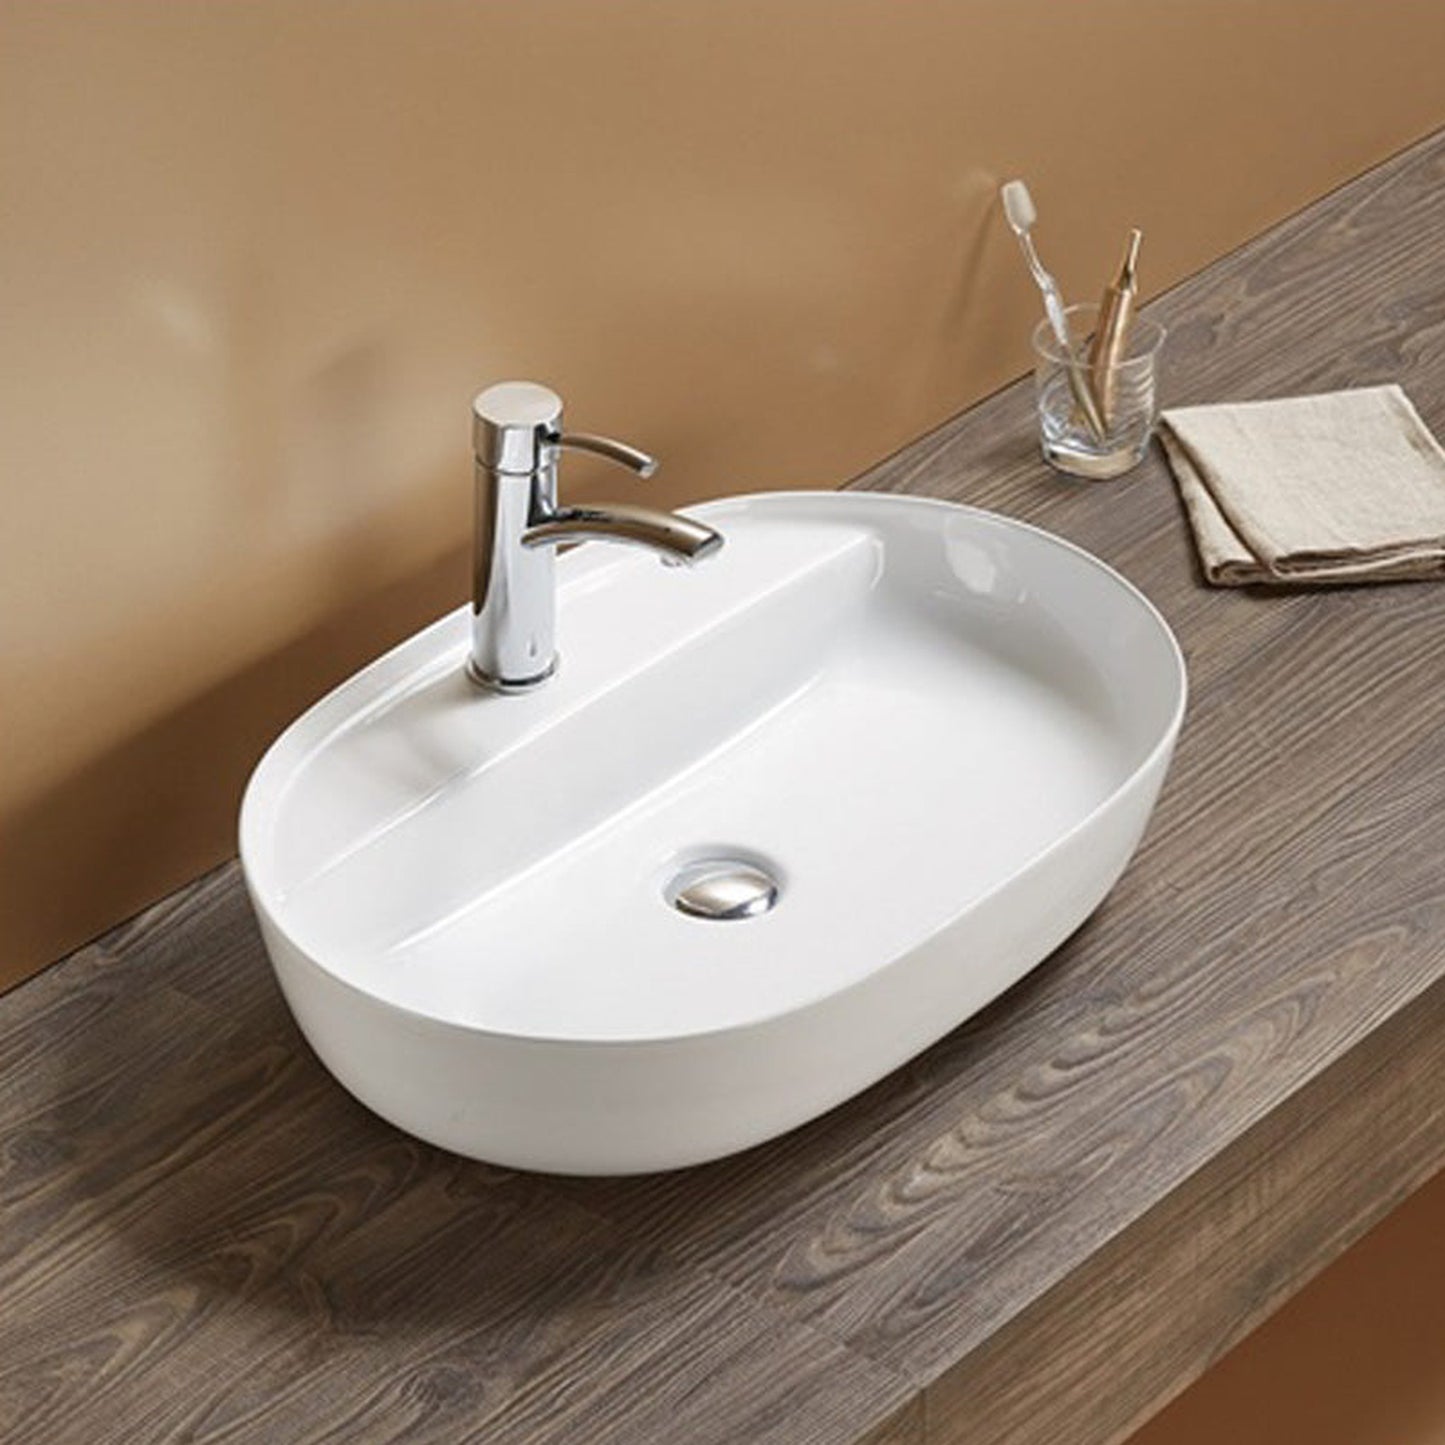 American Imaginations AI-27943 Oval White Ceramic Bathroom Vessel Sink with Enamel Glaze Finish